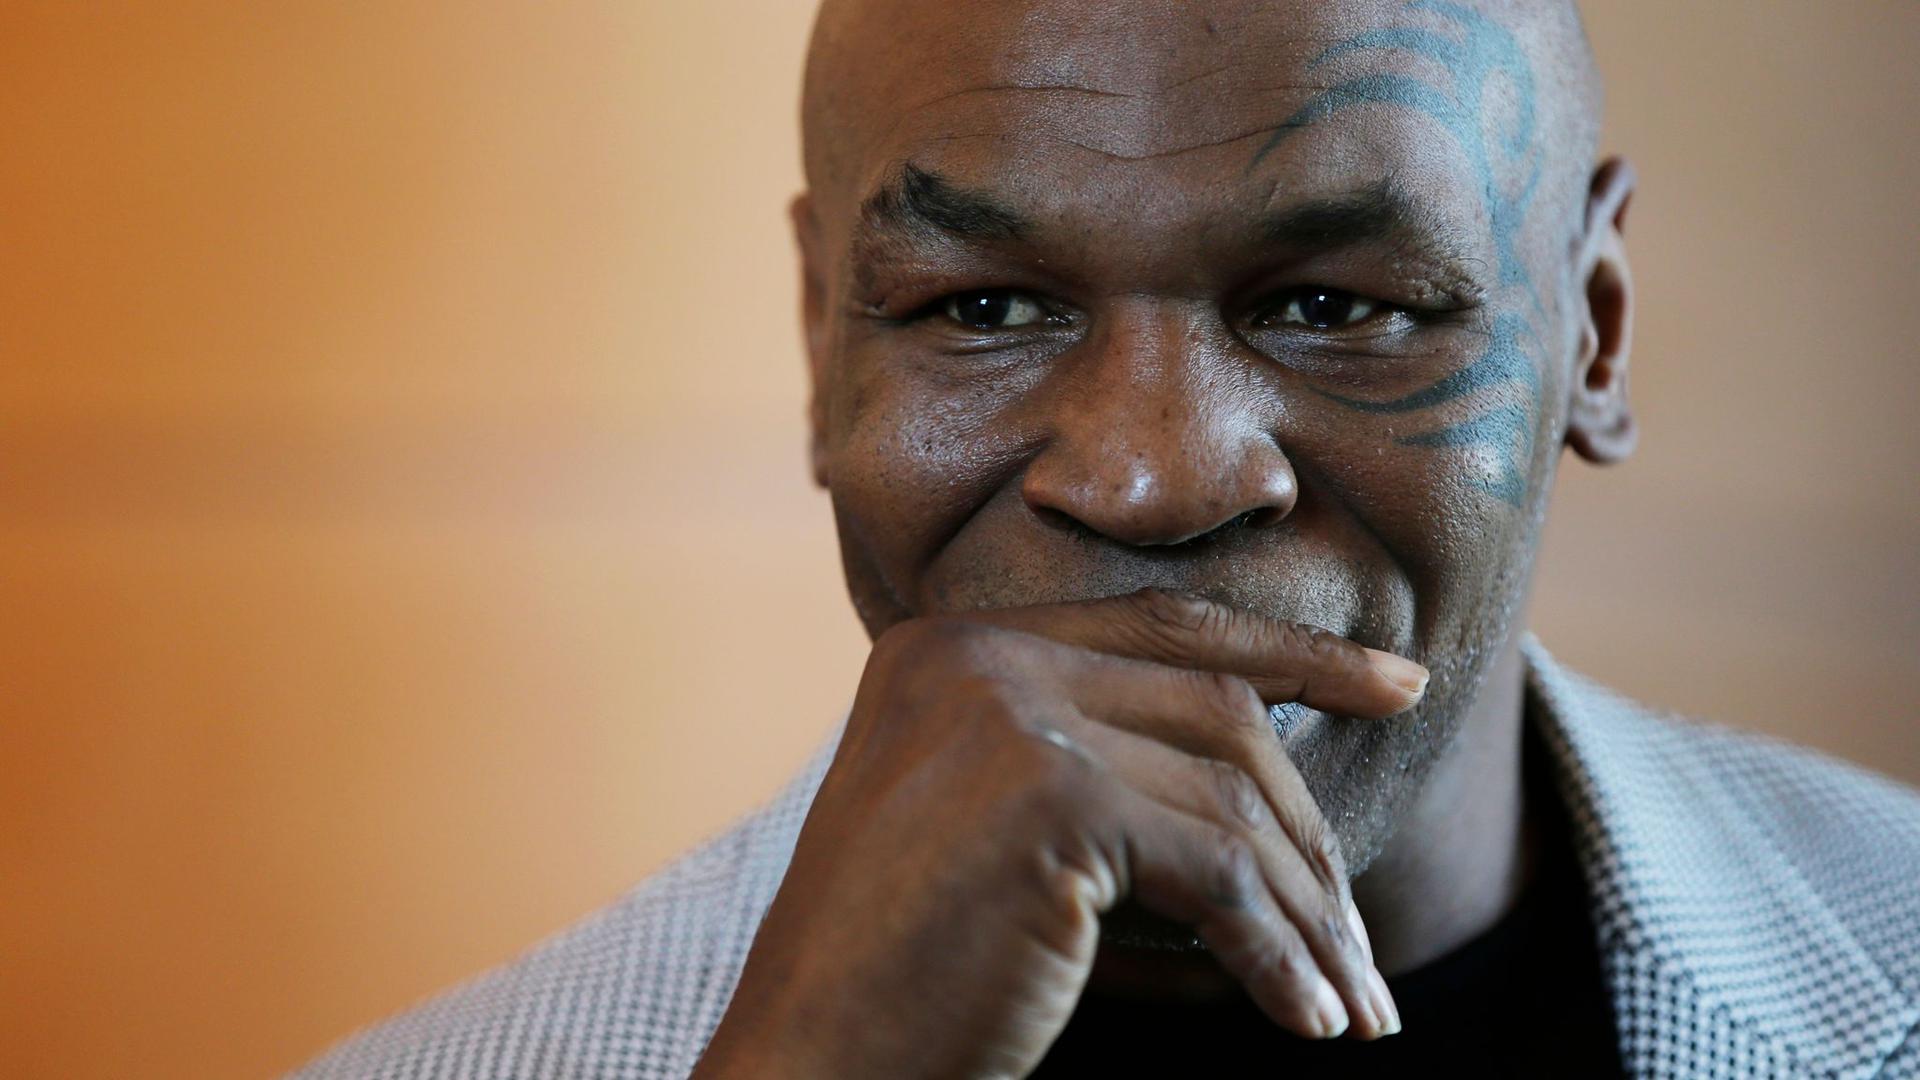 Zieht die Boxhandschuhe wieder an: Mike Tyson.